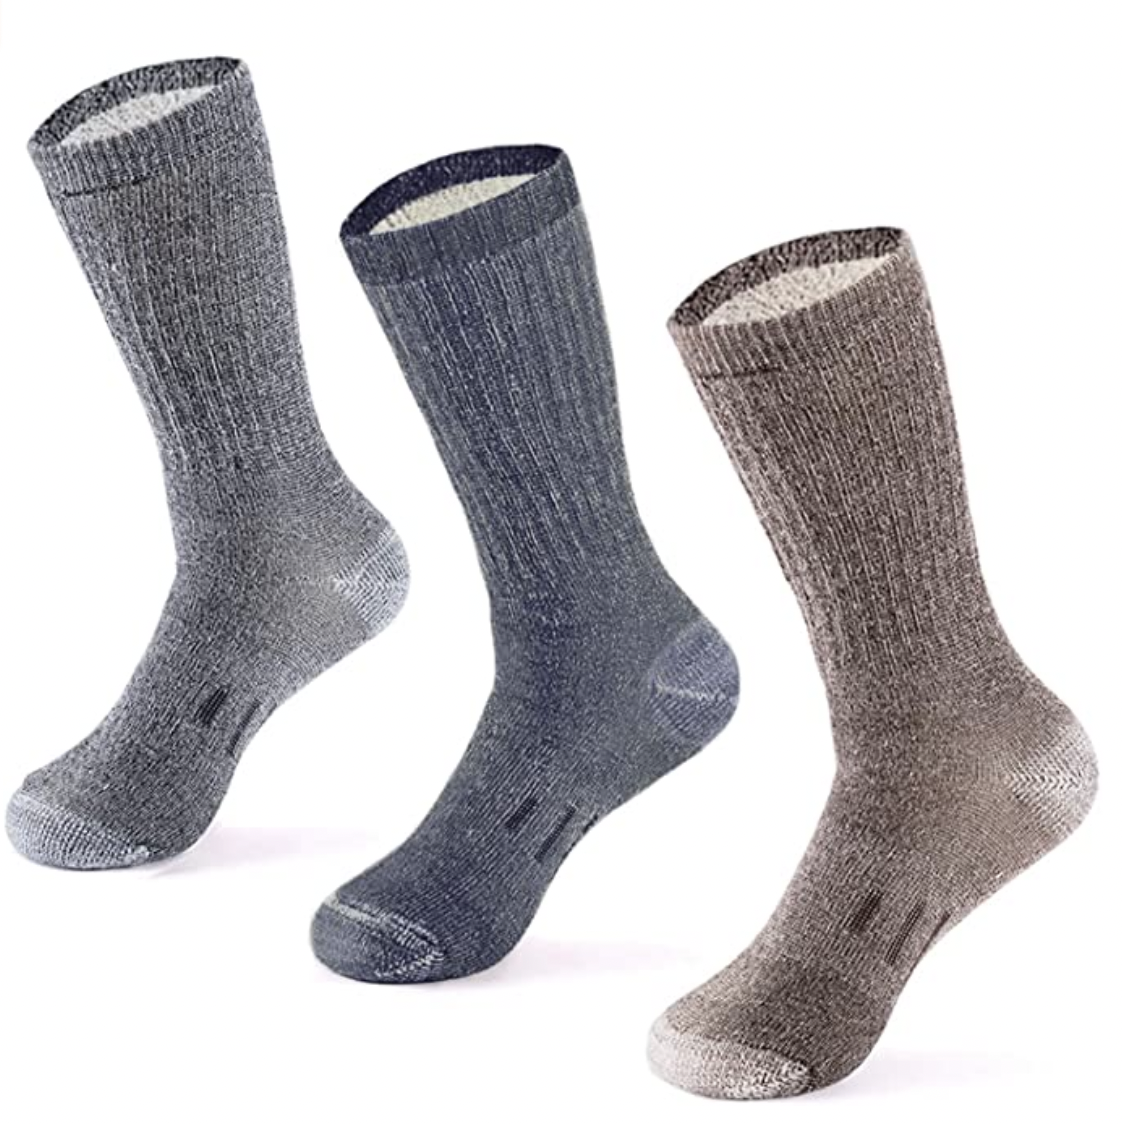 MERIWOOL Merino Wool Hiking Socks for Men and Women